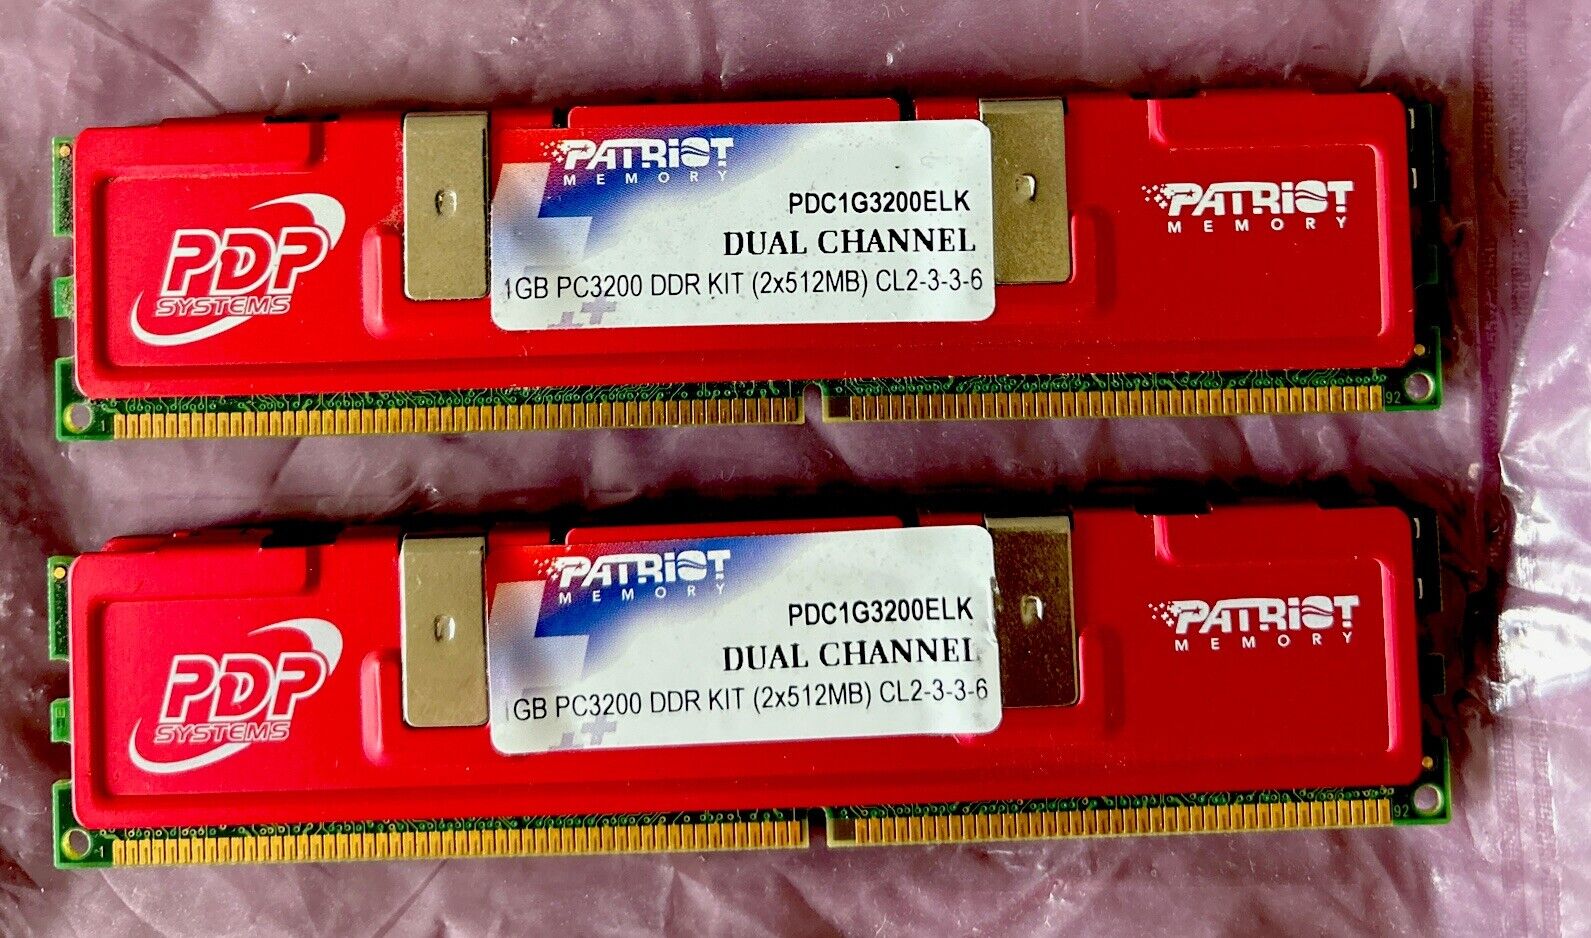 PATRIOT MEMORY 1GB PC3200 DDR KIT 1 GB DDR400 (2x512MB) PDC1G3200ELK CL2-3-3-6